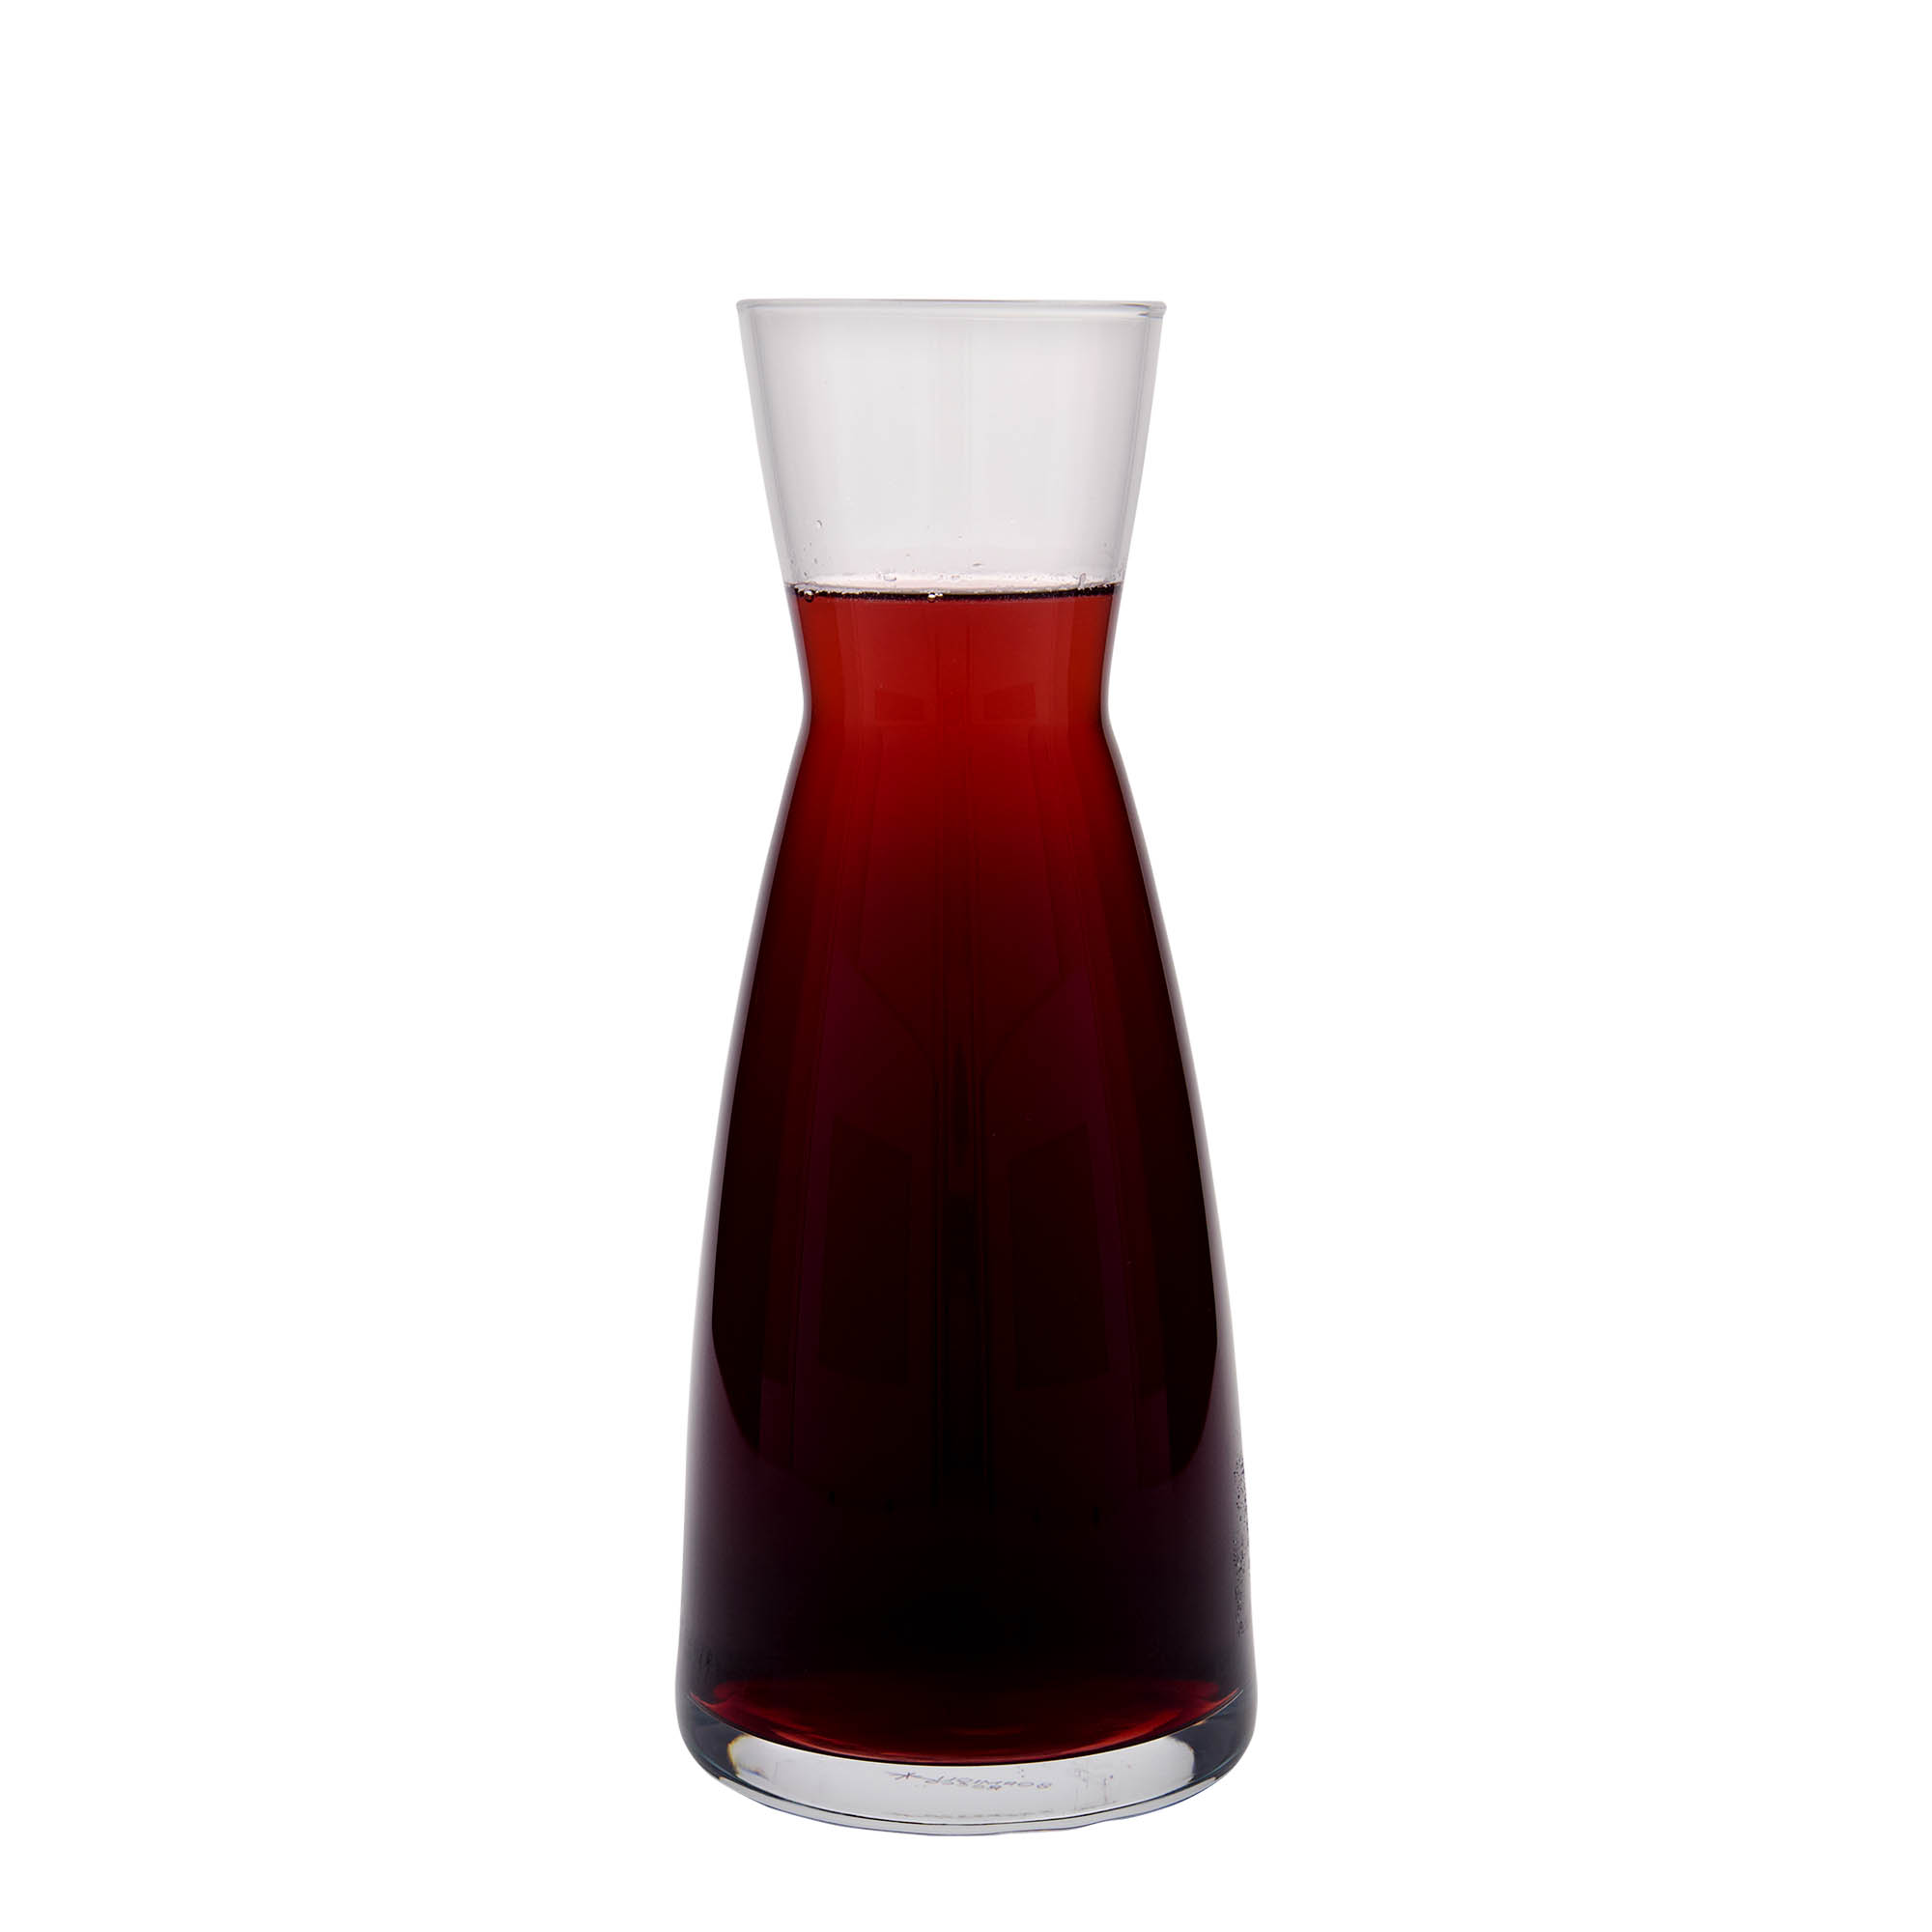 1,000 ml carafe 'Ypsilon', glass